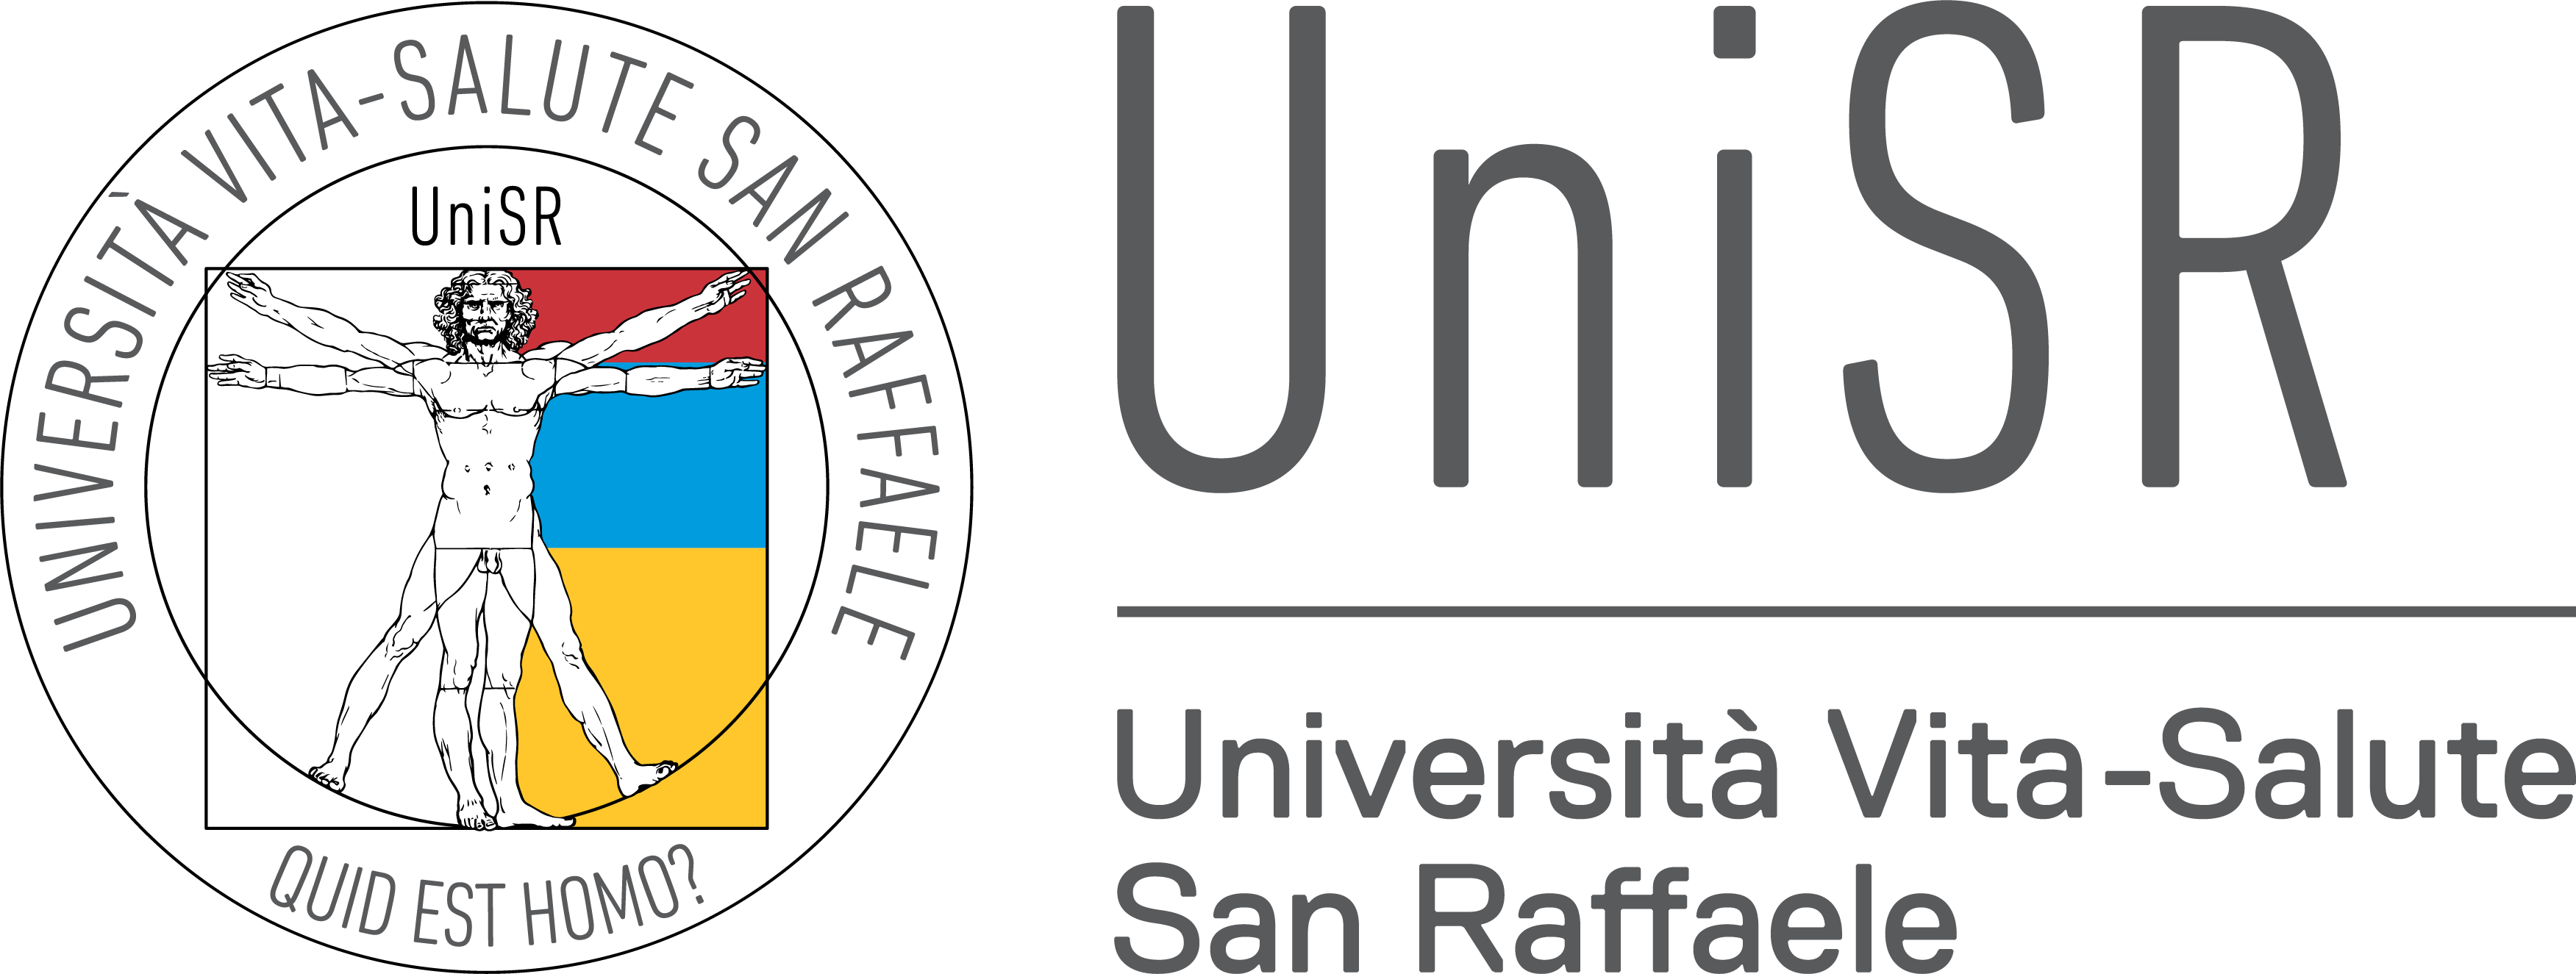 Logo UniSR 2019_intero_rgb